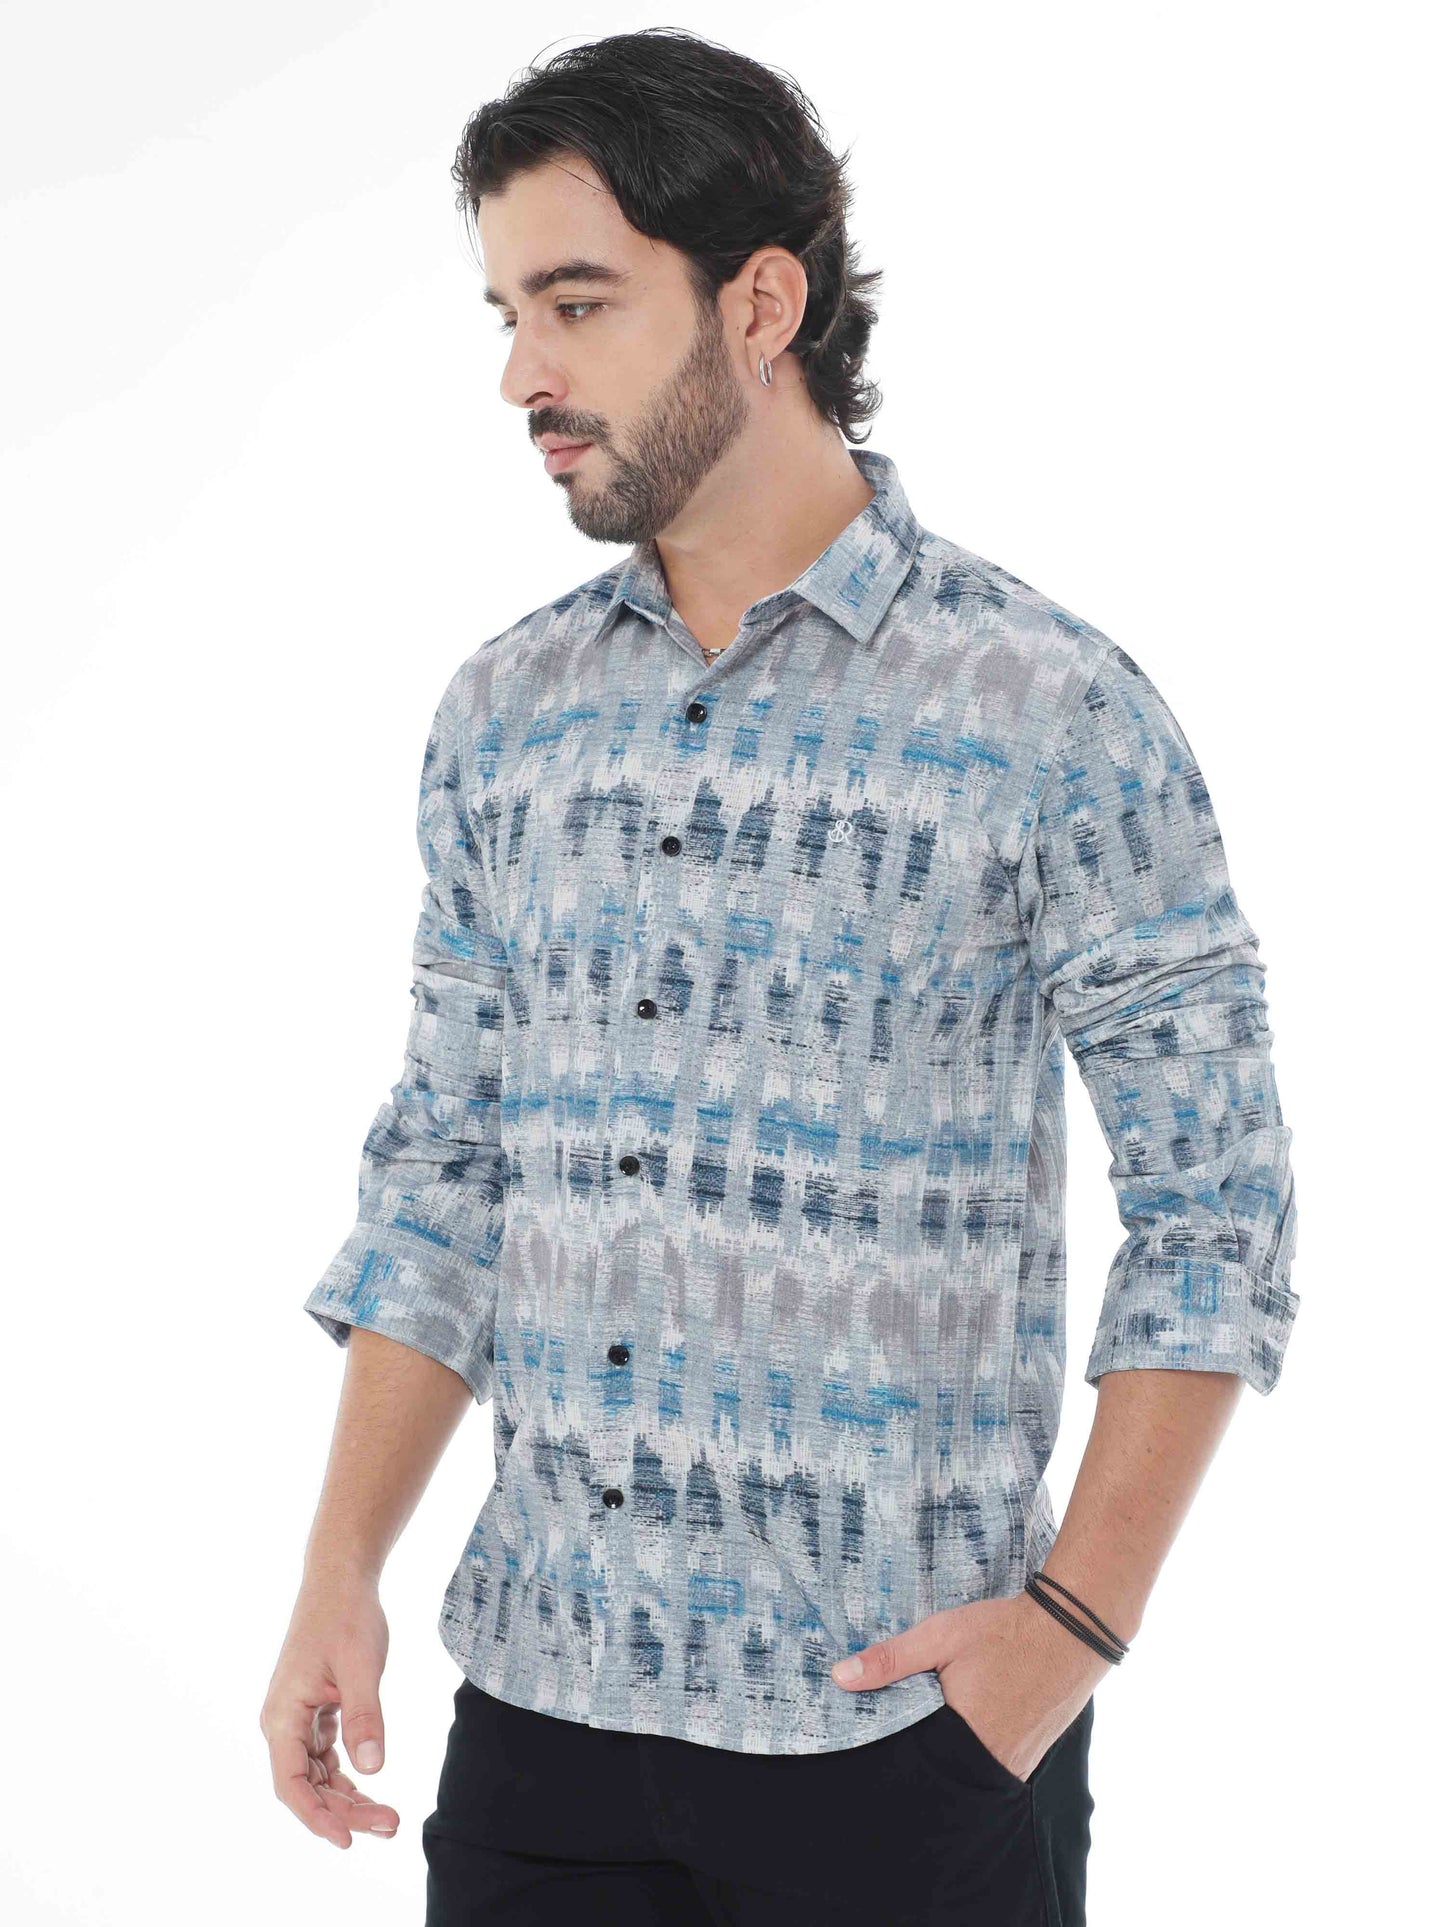 Blue Jay Print Shirt